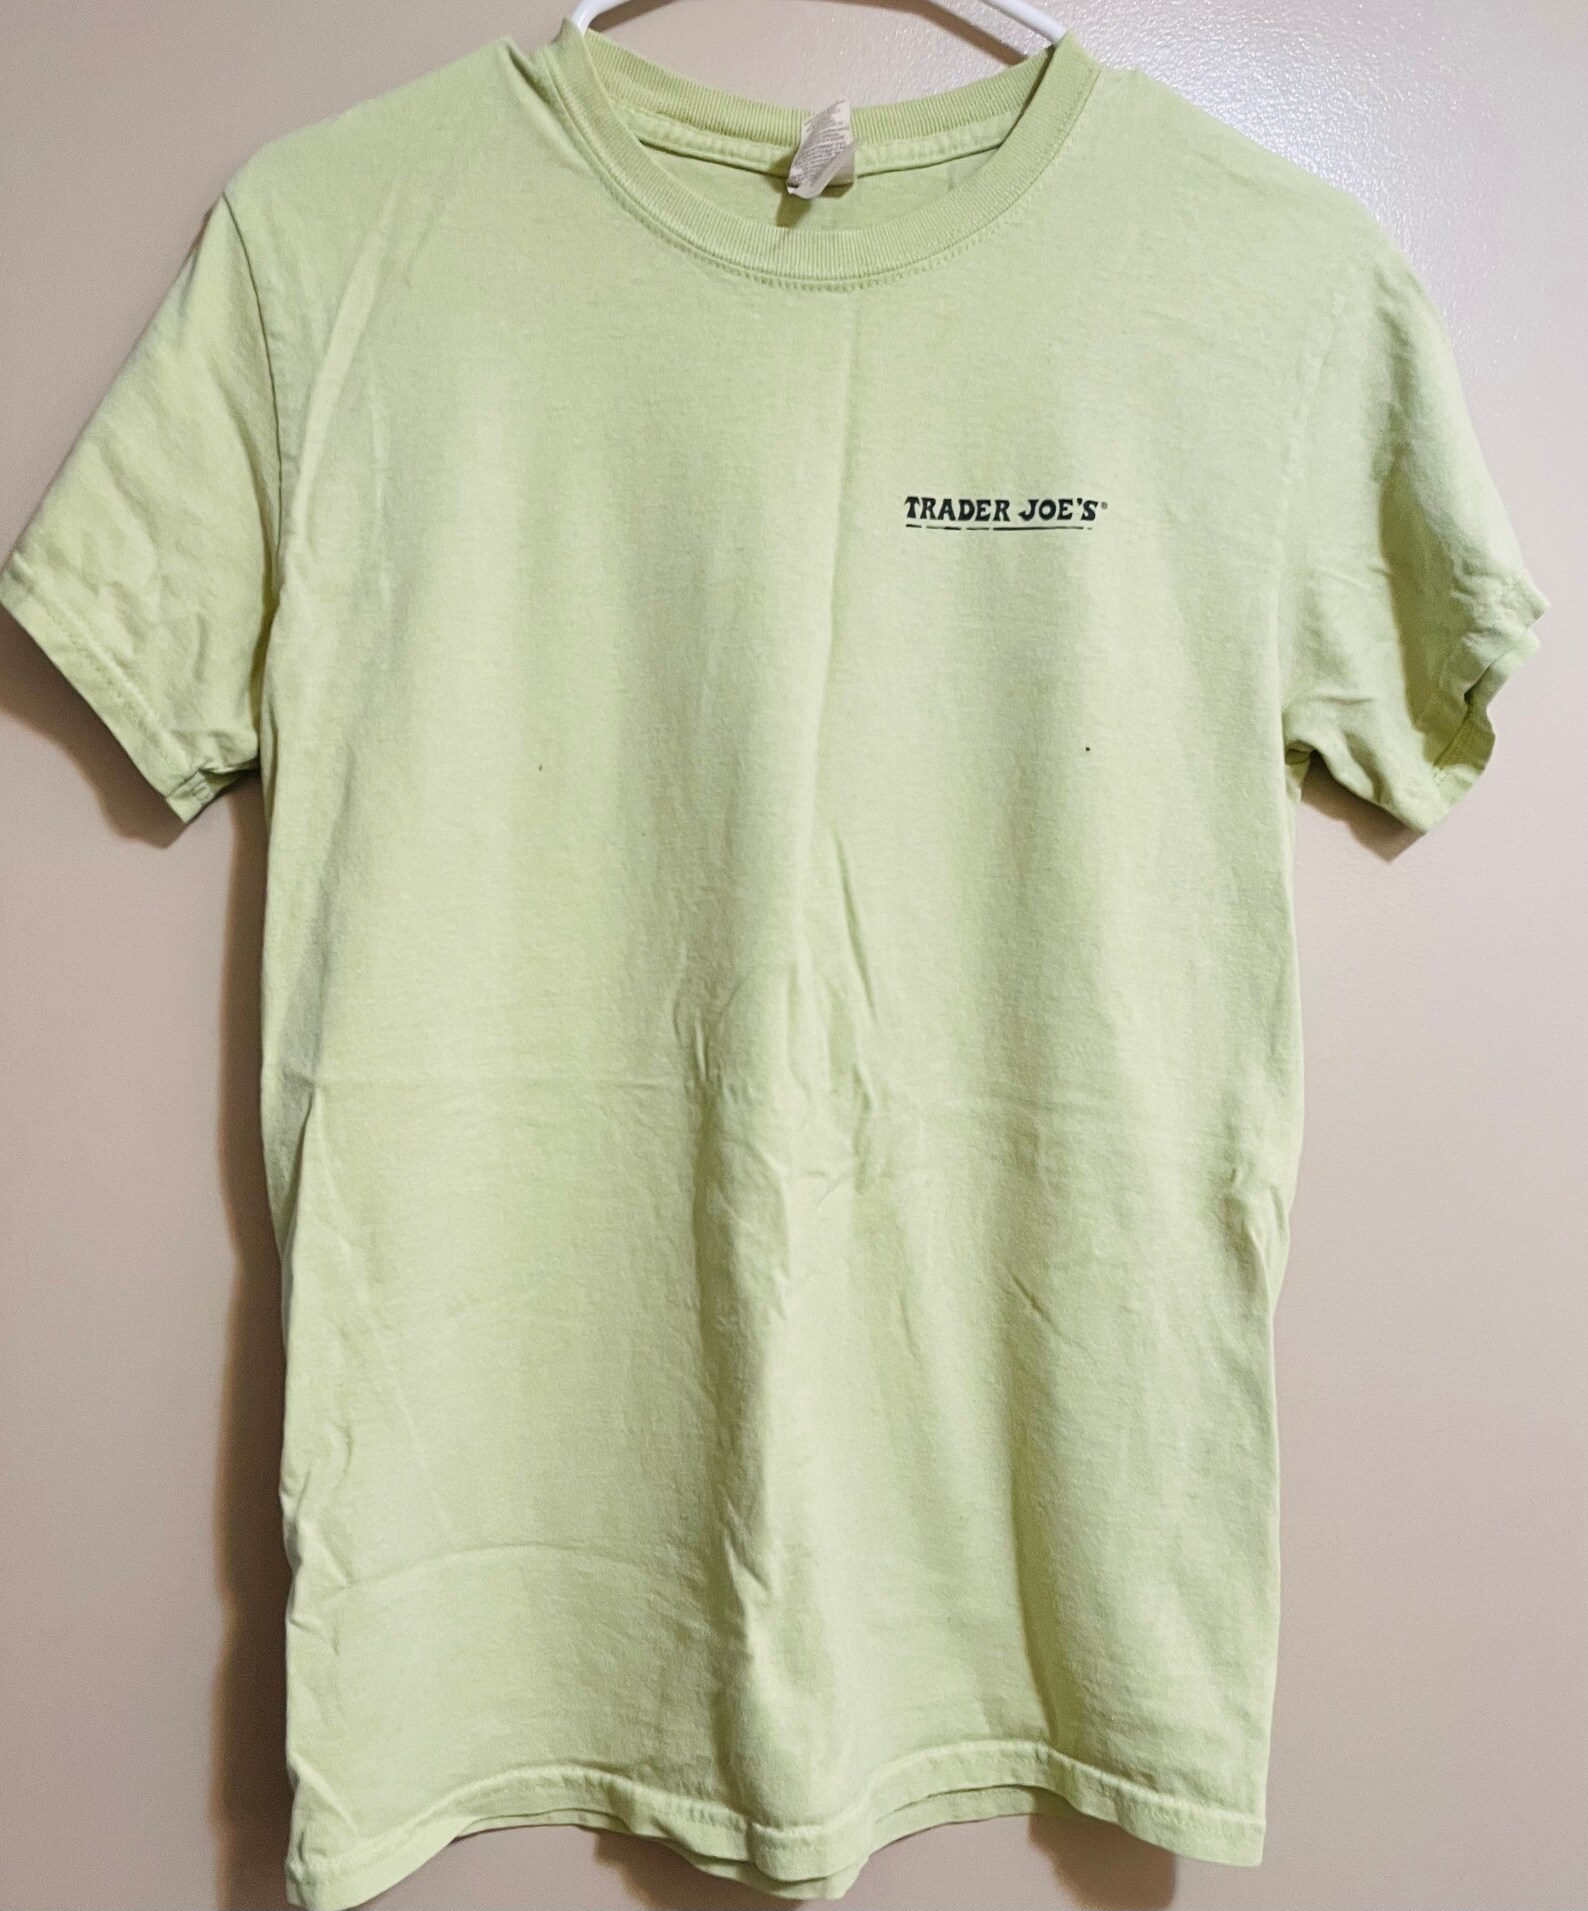 Vintage Trader Joes Shirts | Etsy